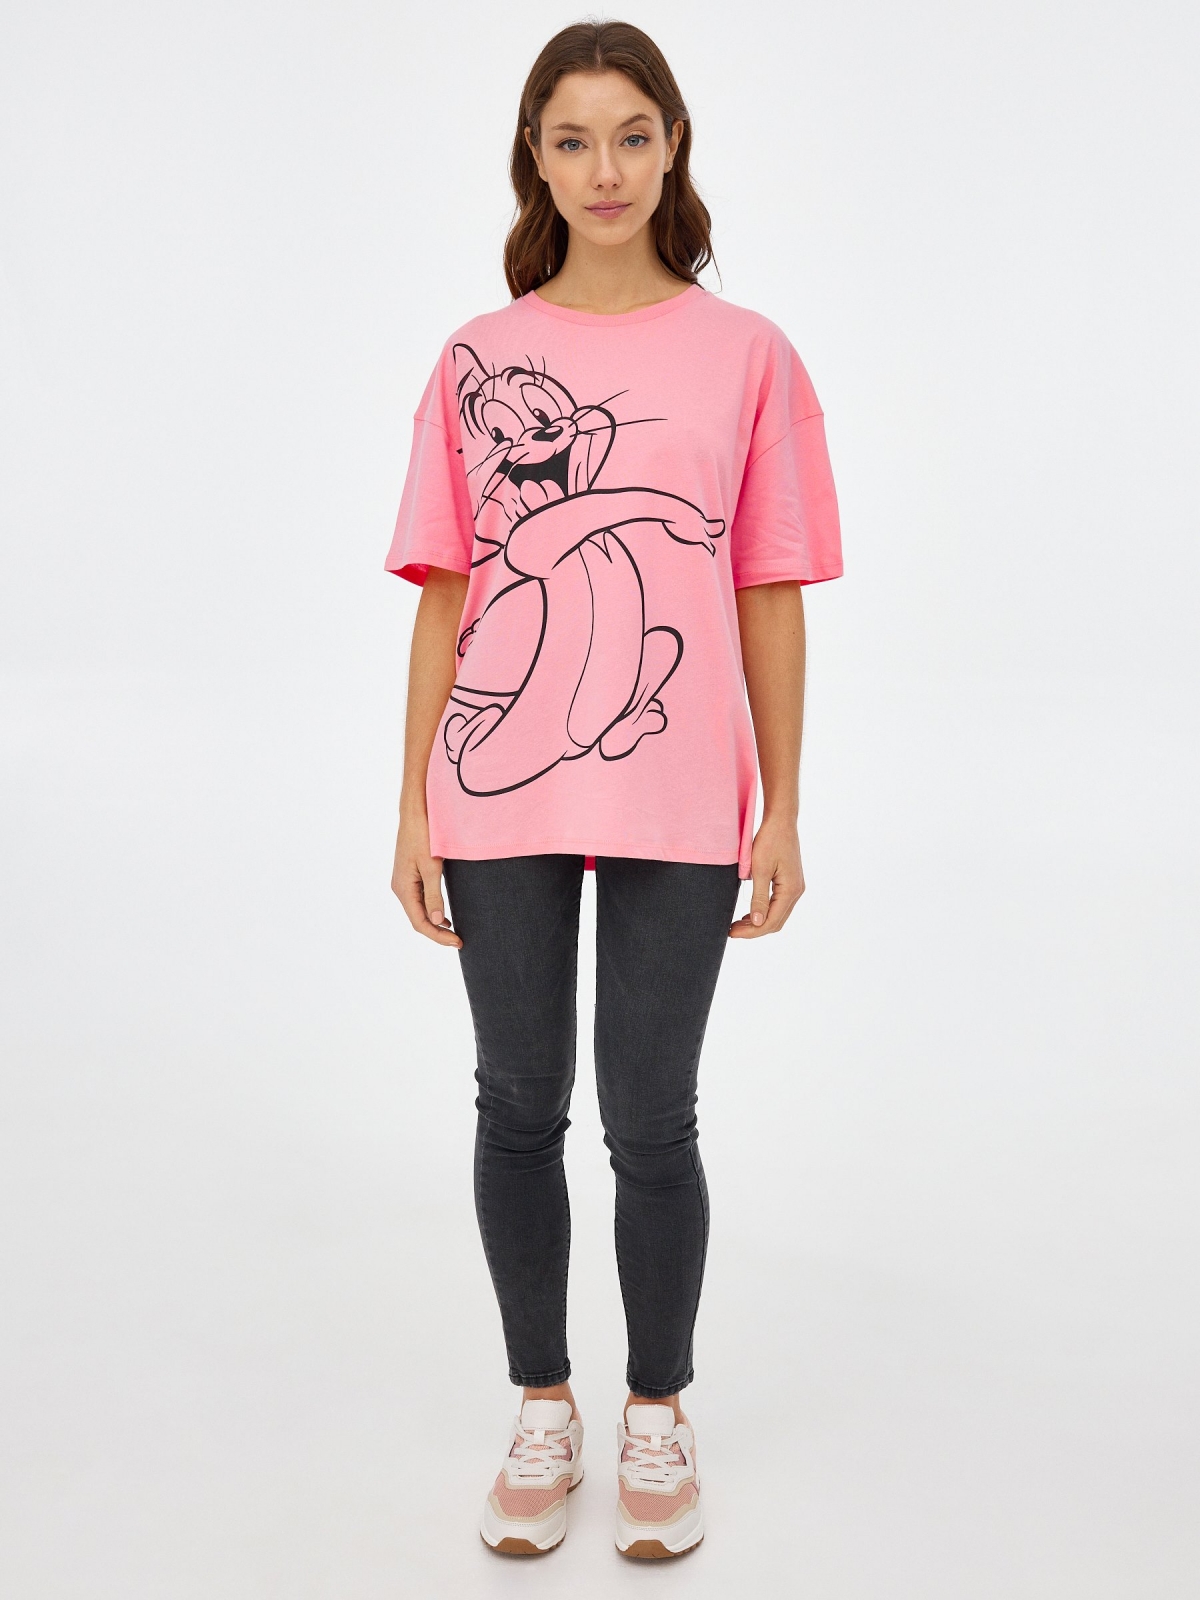 T-shirt oversized Tom & Jerry rosa claro vista geral frontal